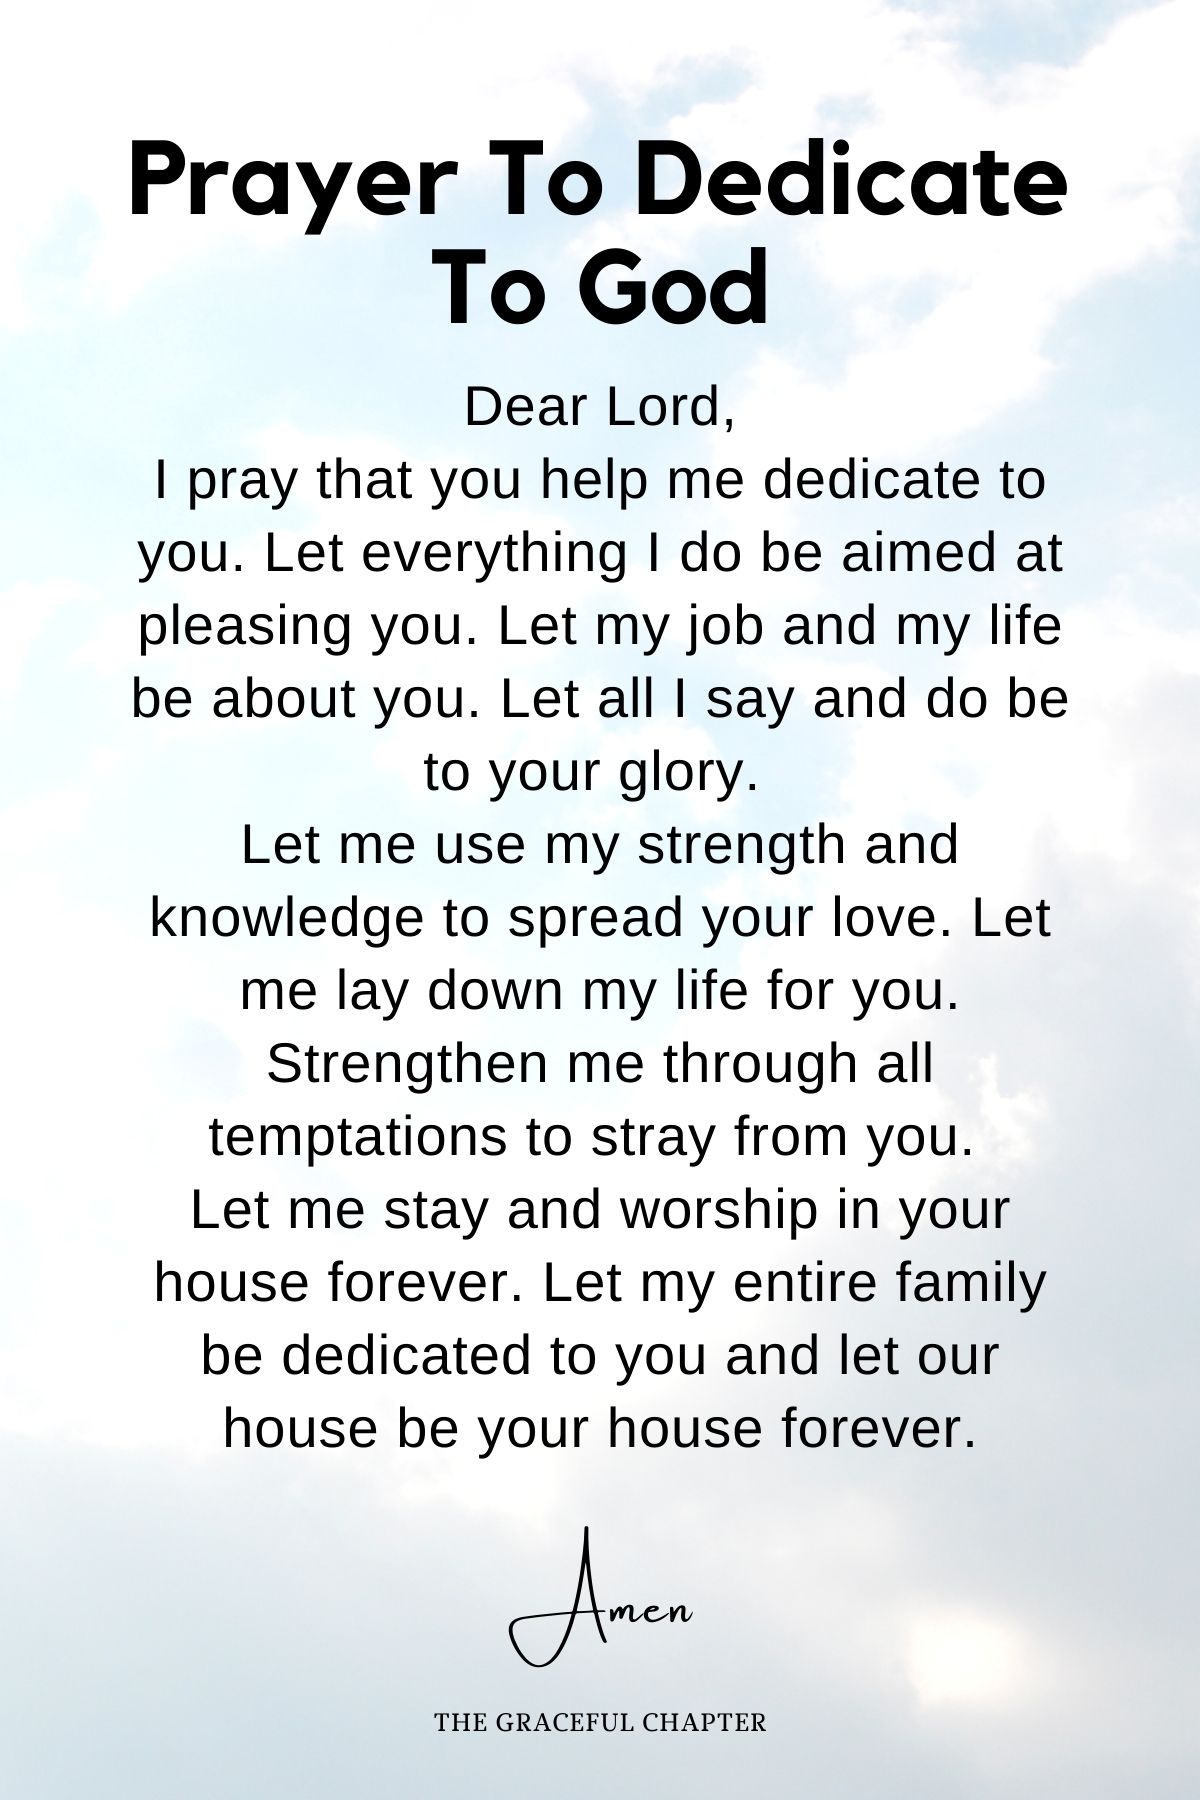 Prayer to dedicate to God